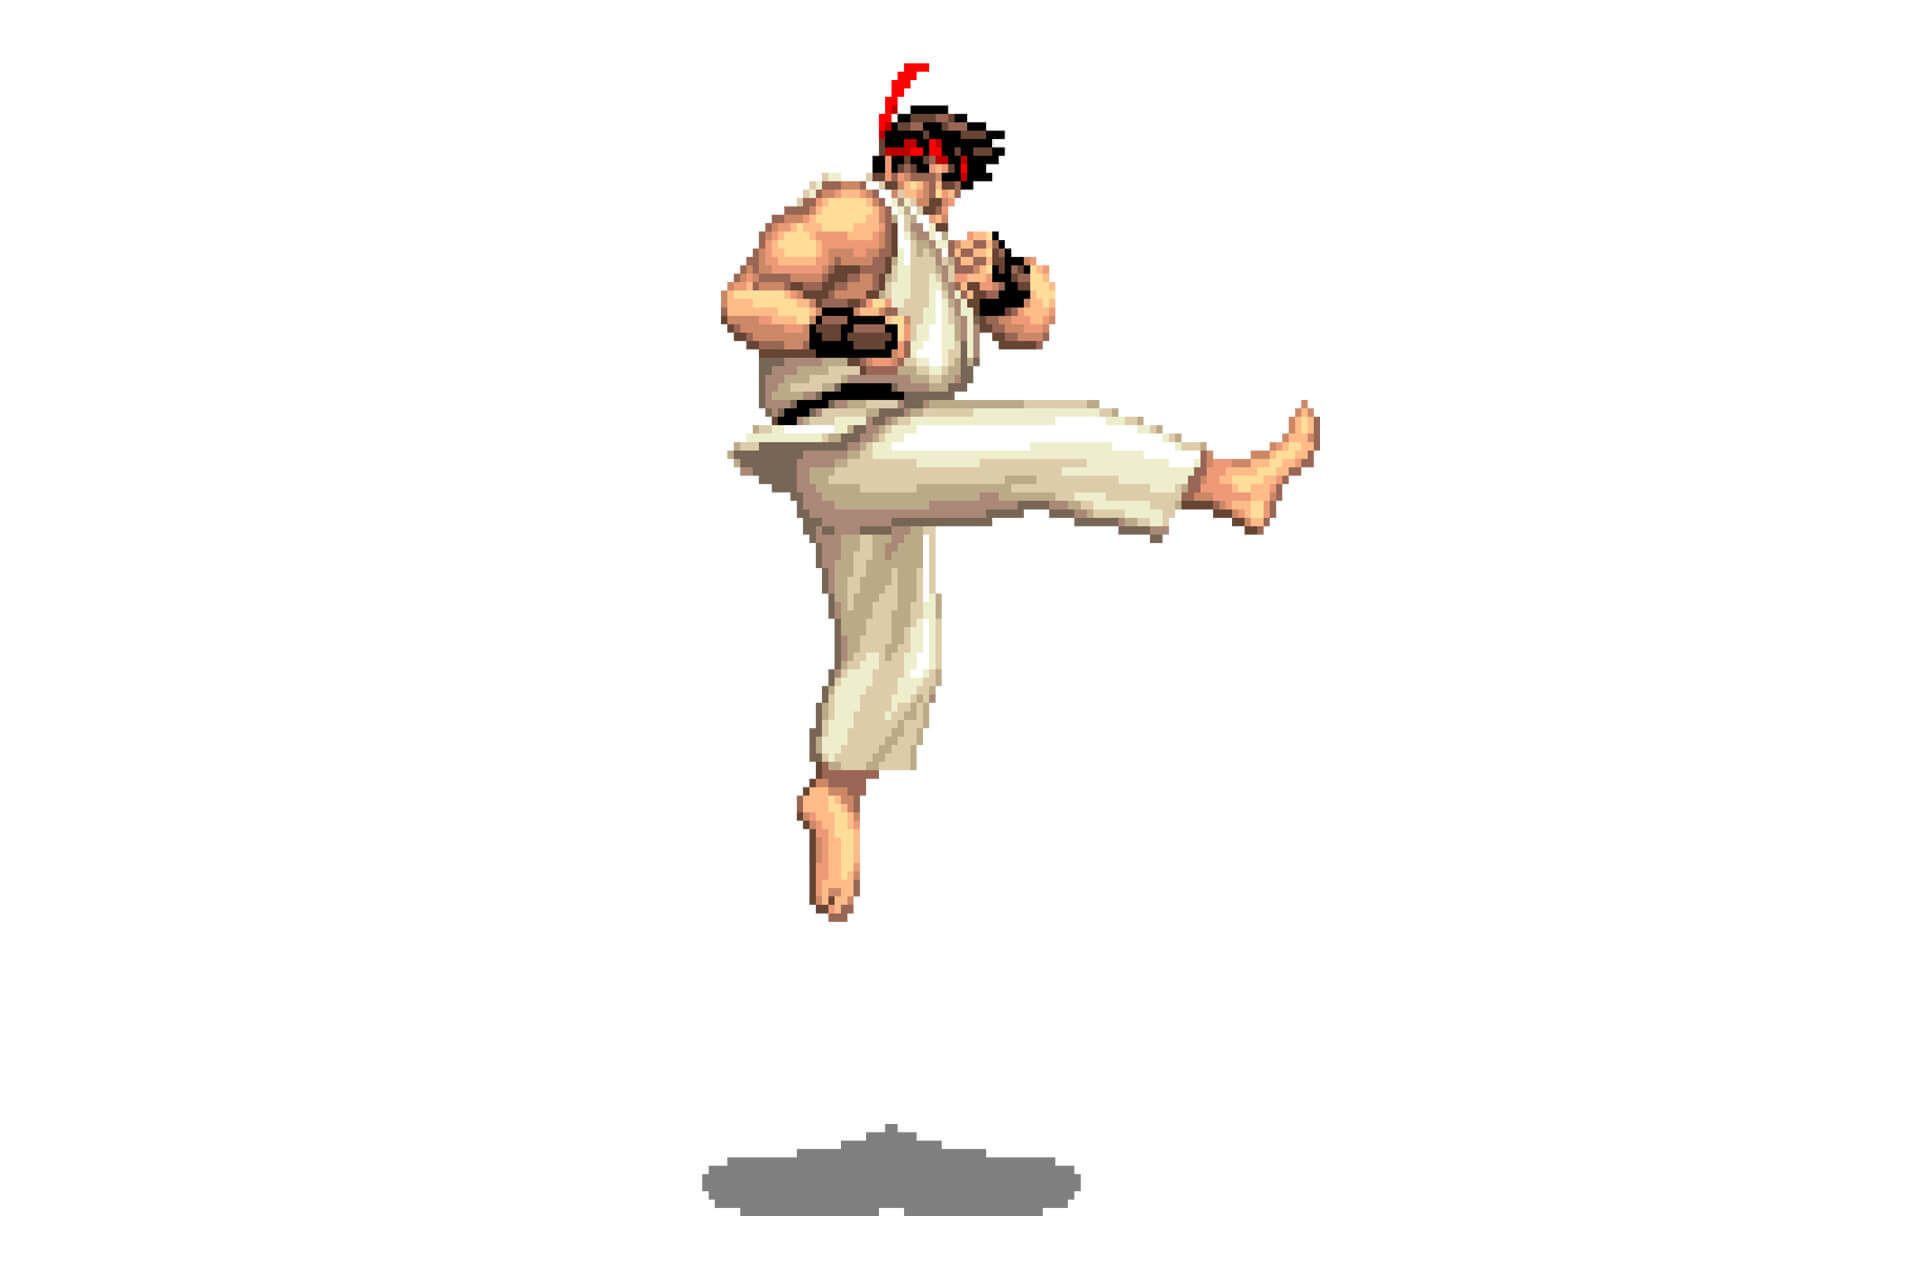 An image illustrating Ryu performing the Tatsumaki Senpukyaku [1].